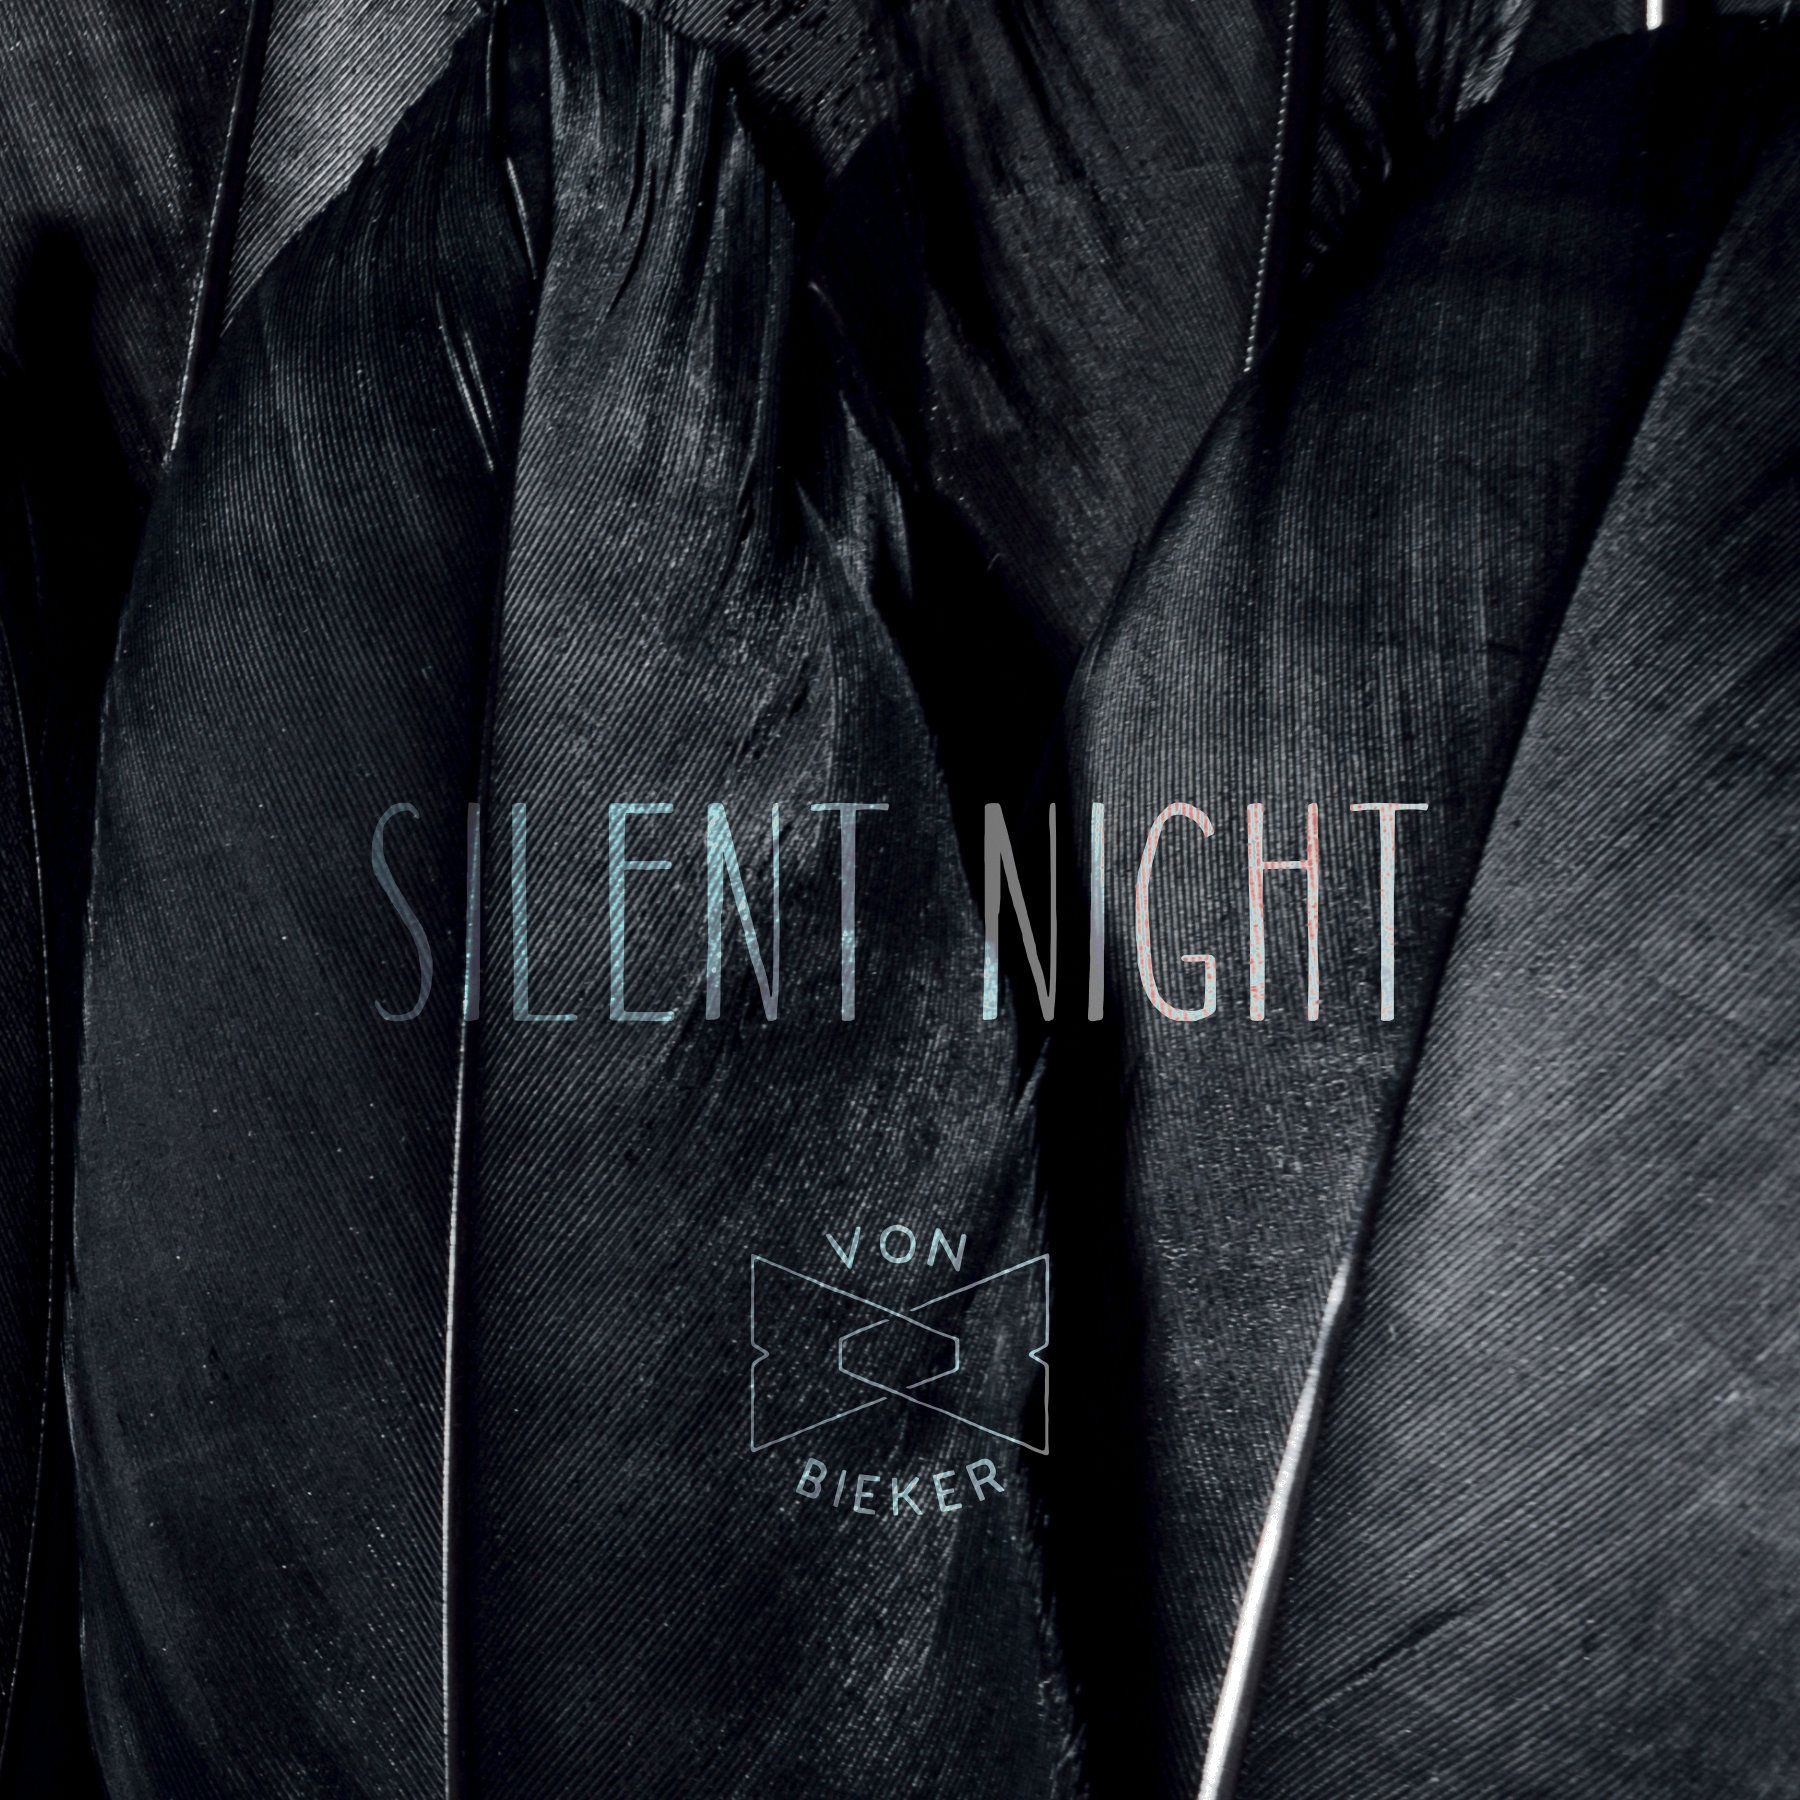 Silent Night 🎵